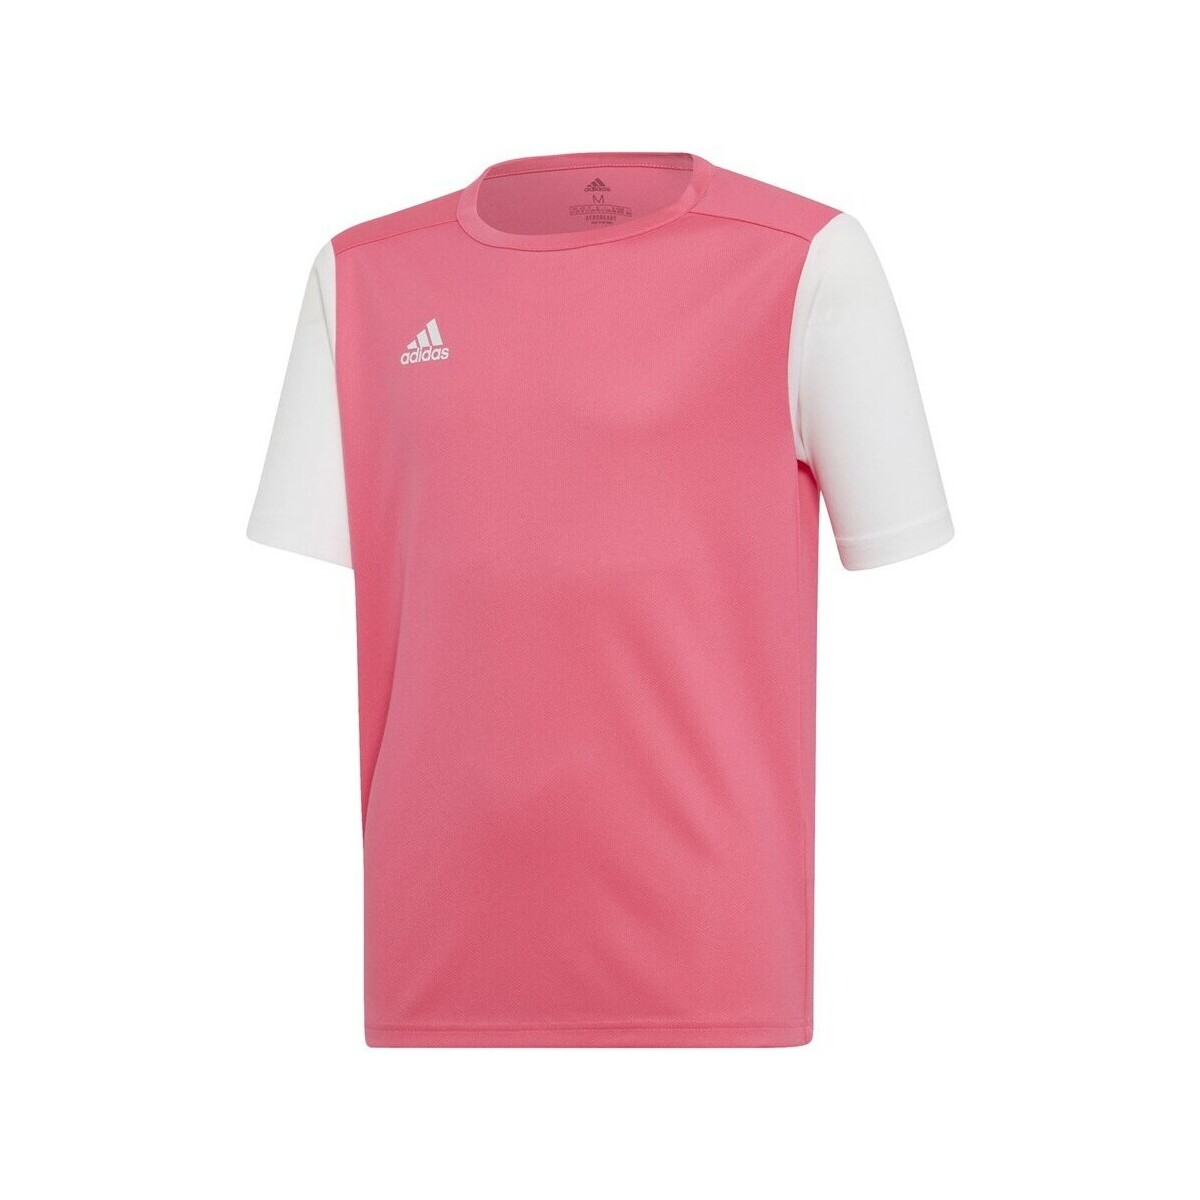 Clothing Boy Short-sleeved t-shirts adidas Originals Junior Estro 19 Pink, White